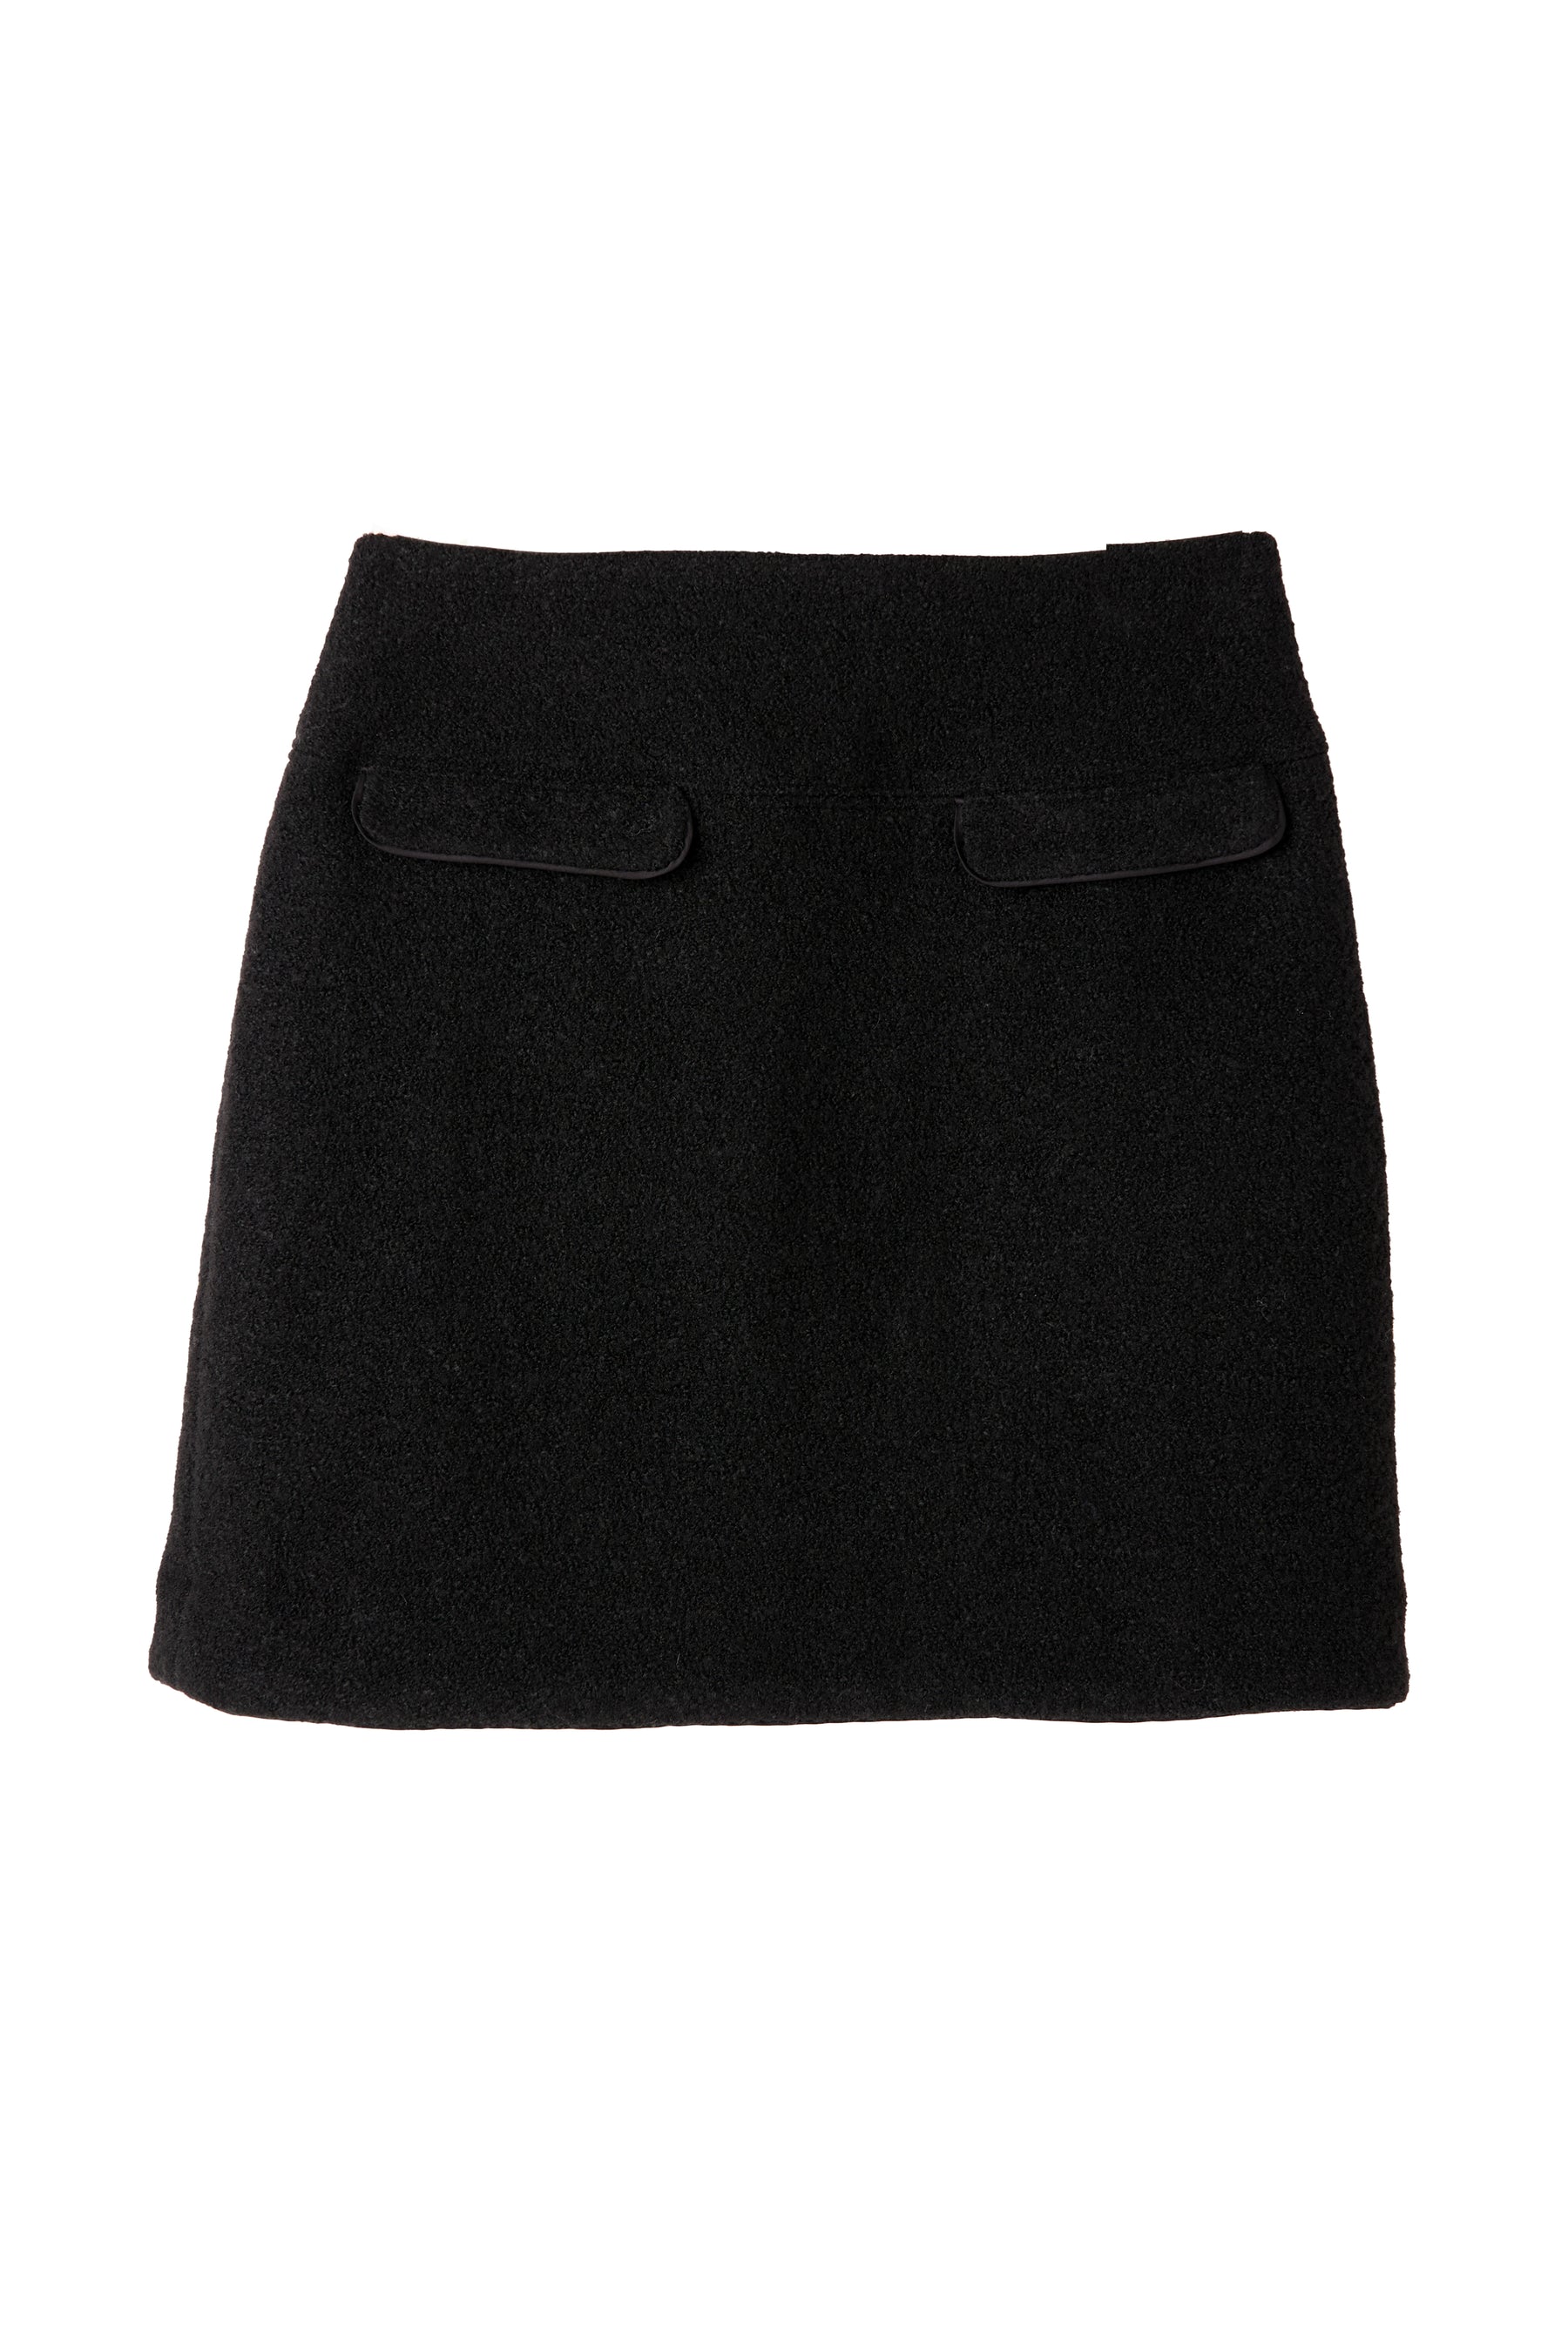 Hemingway Boucle Skirtカラーブラック - ミニスカート